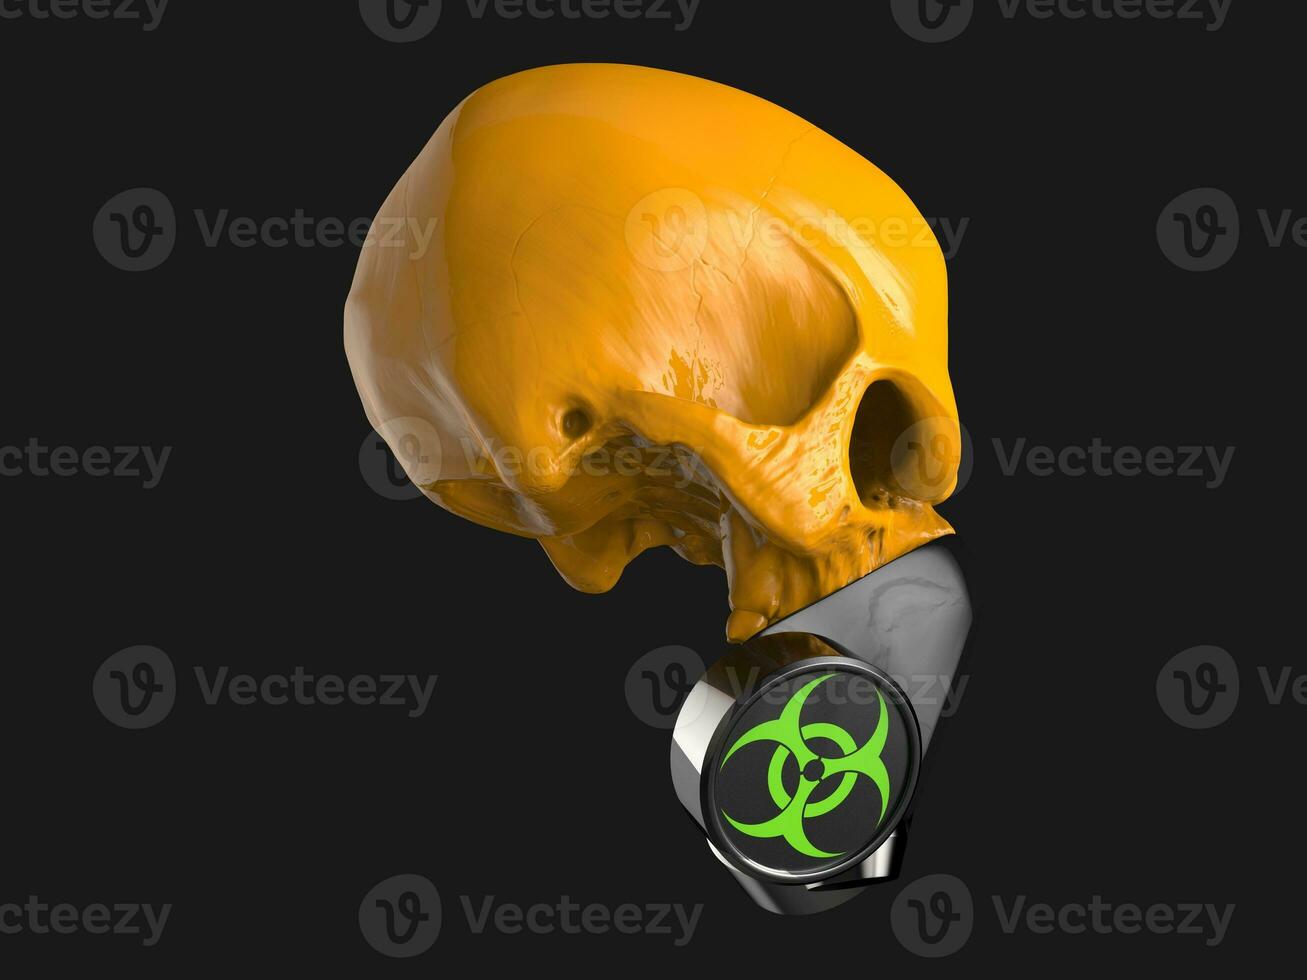 gul skalle med svart biohazard gas mask på - sida se foto